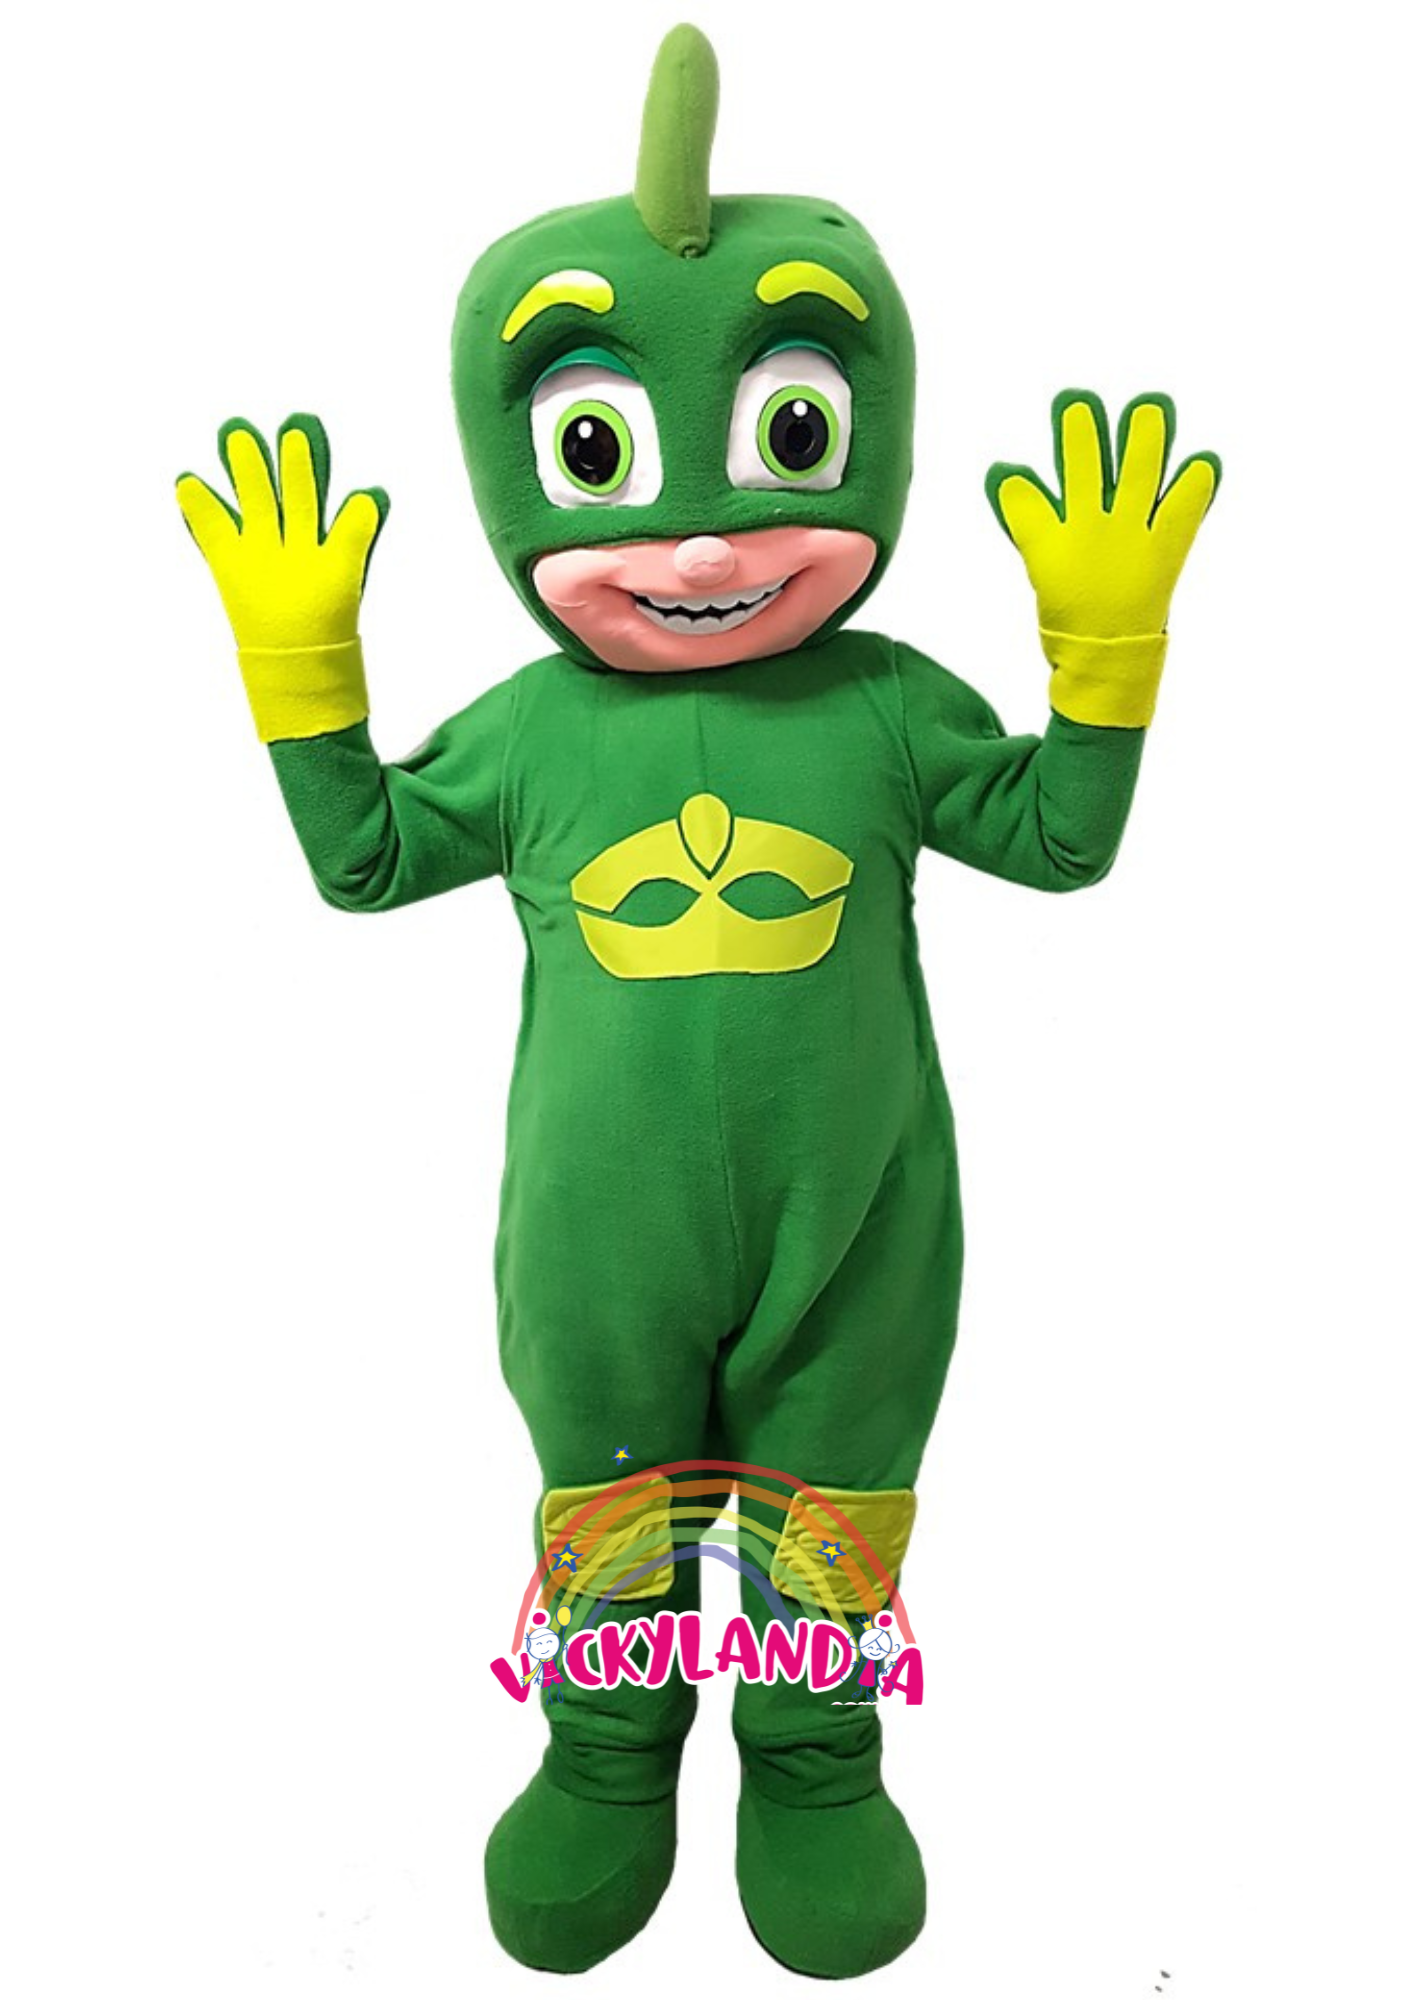 niño verde superhereo disfraz muñeco cabezon cabezudo botarga mascota publicitaria Peluches personalizados Merchandising corporativos  personalizados fabricante vickylandia